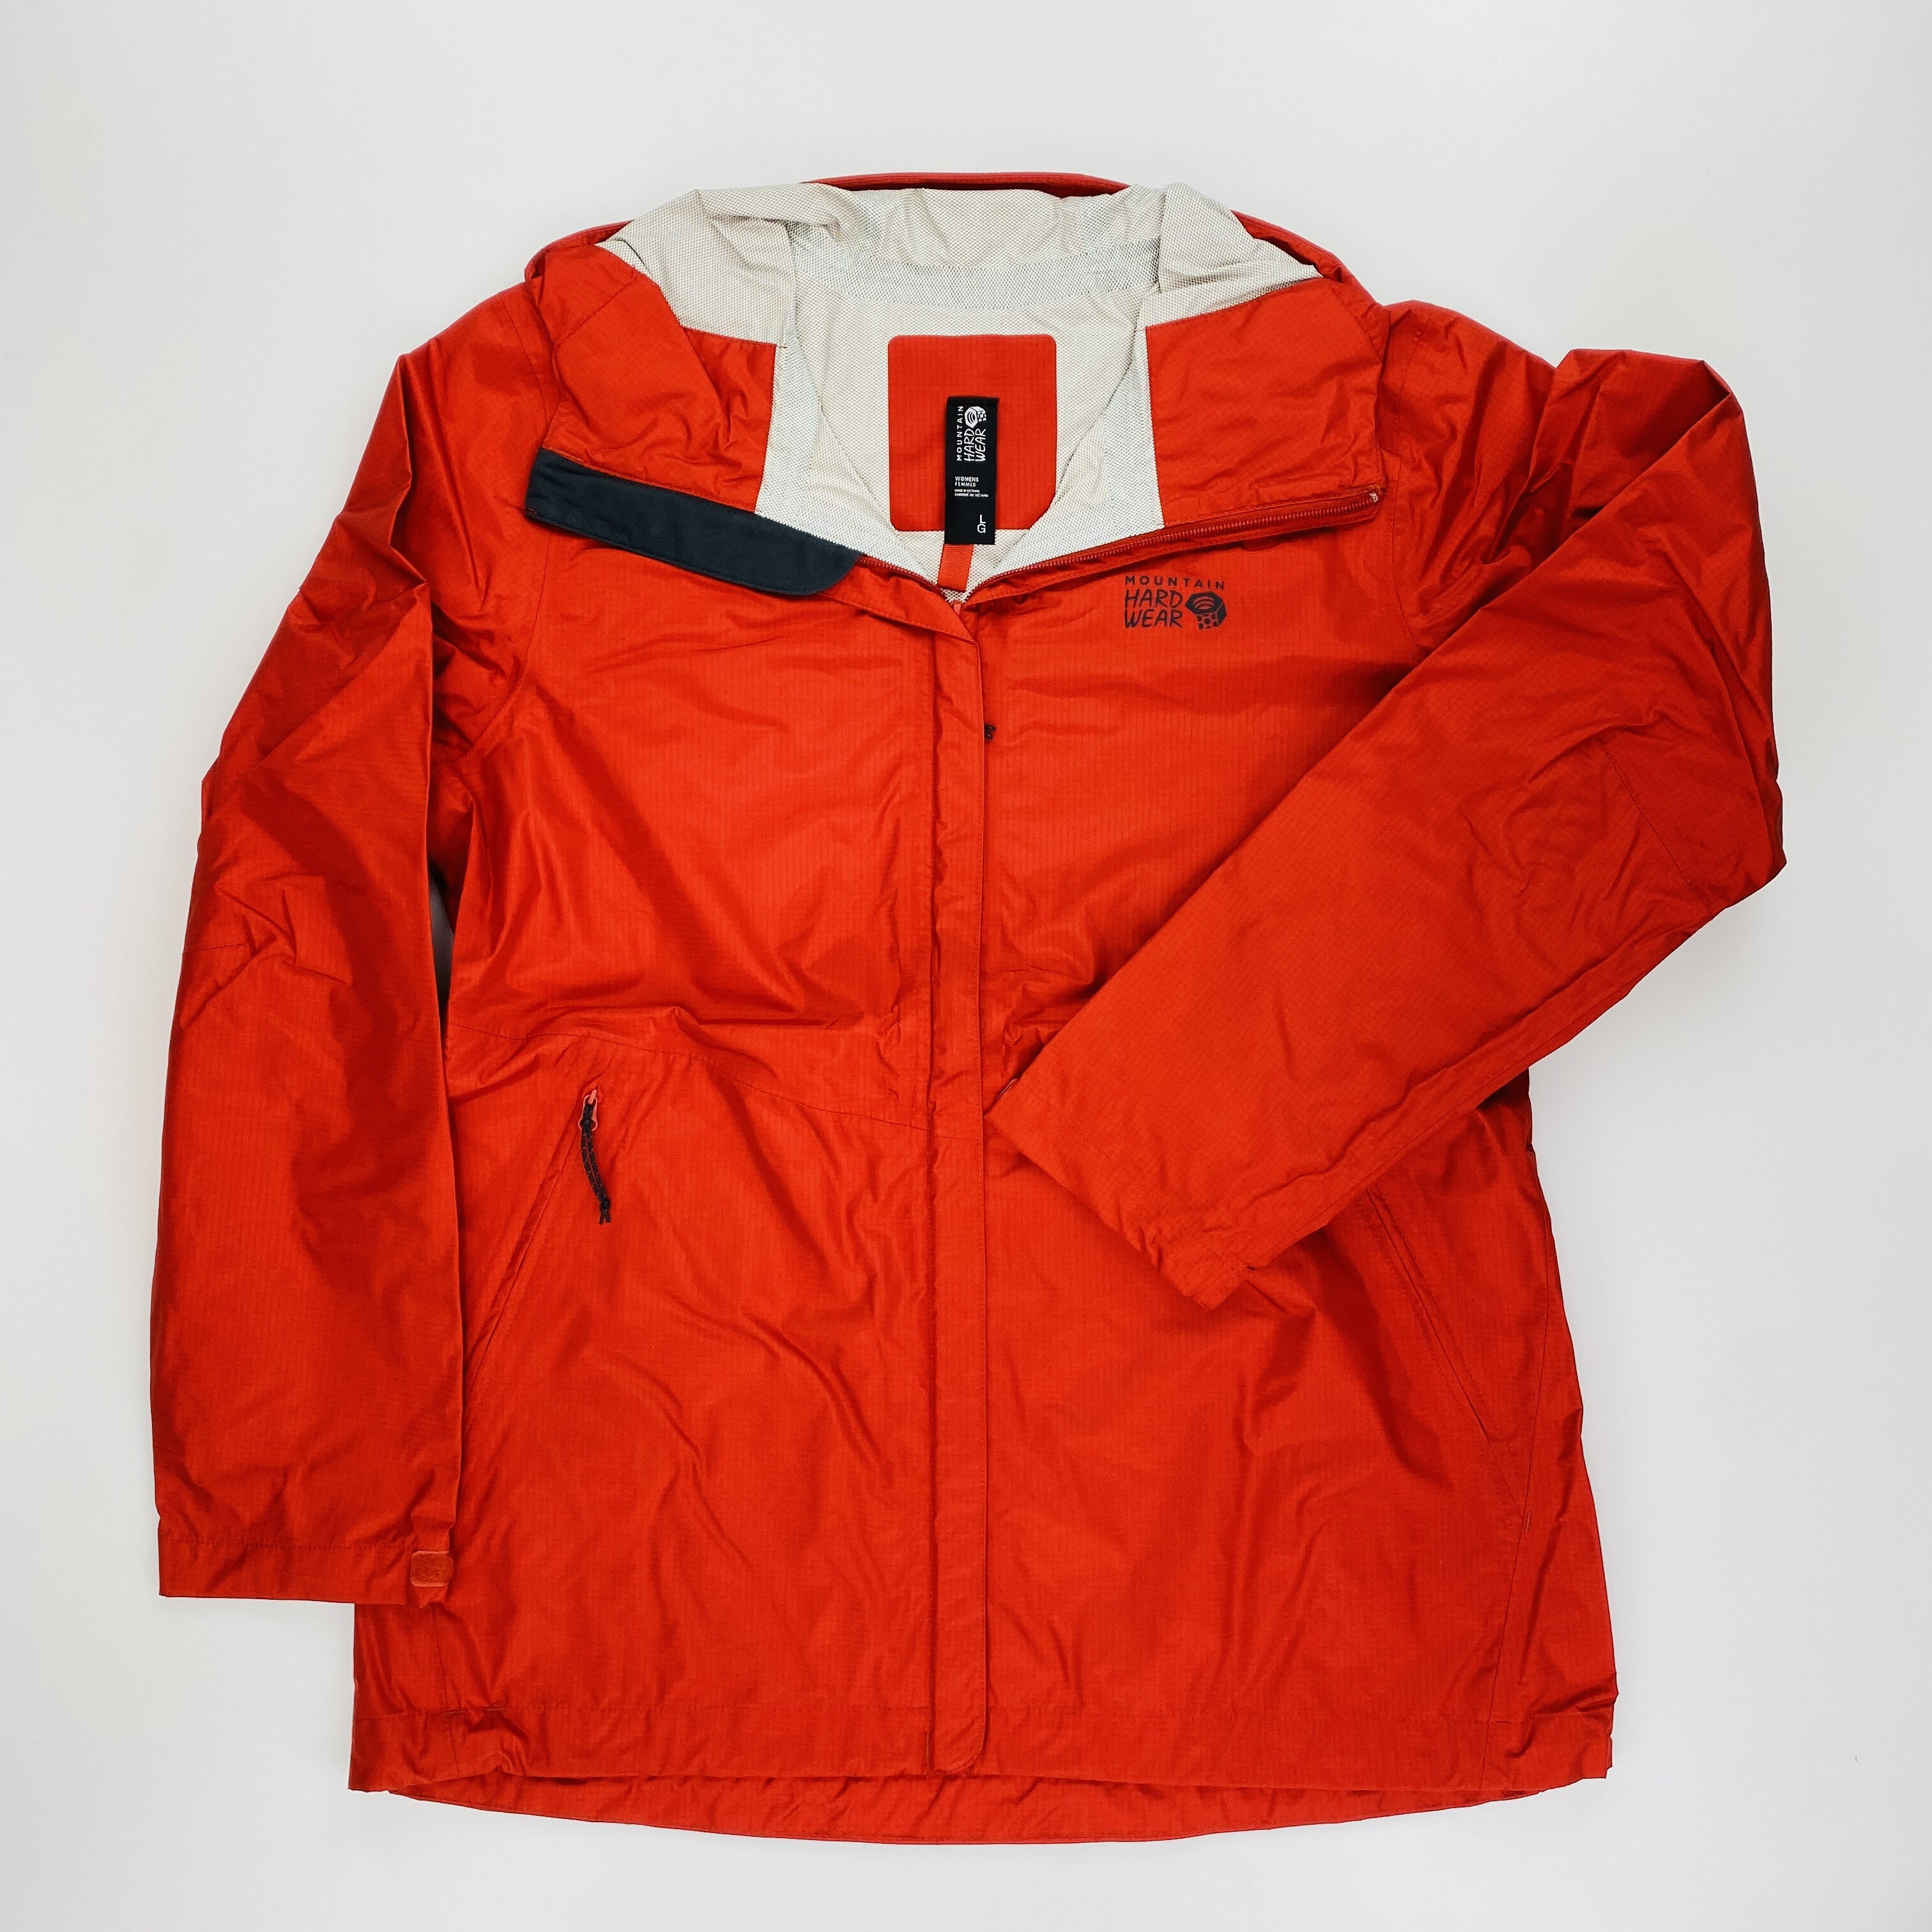 Mountain Hardwear Acadia Woman Jacket - Giacca antipioggia di seconda mano - Donna - Rosso - L | Hardloop